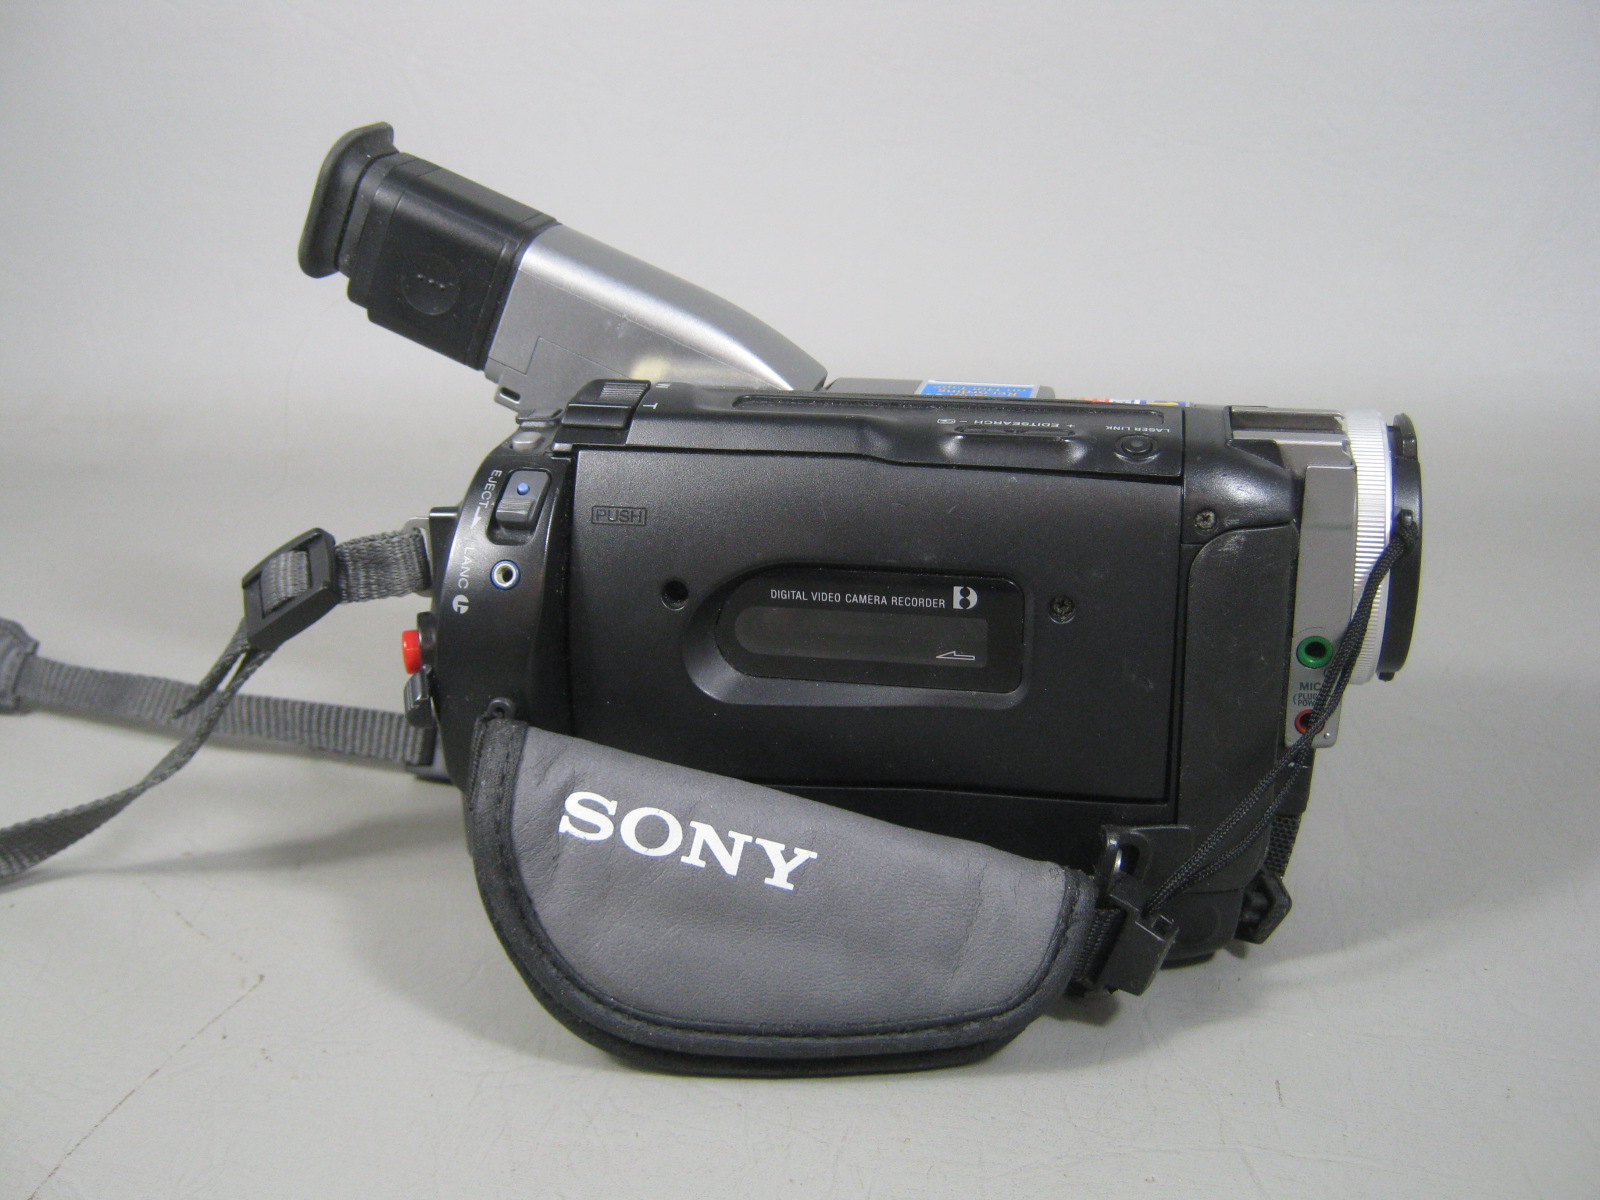 Sony Digital 8 Handycam DCR-TRV110 NTSC Video Camera Camcorder Nightshot Hi8 NR 1